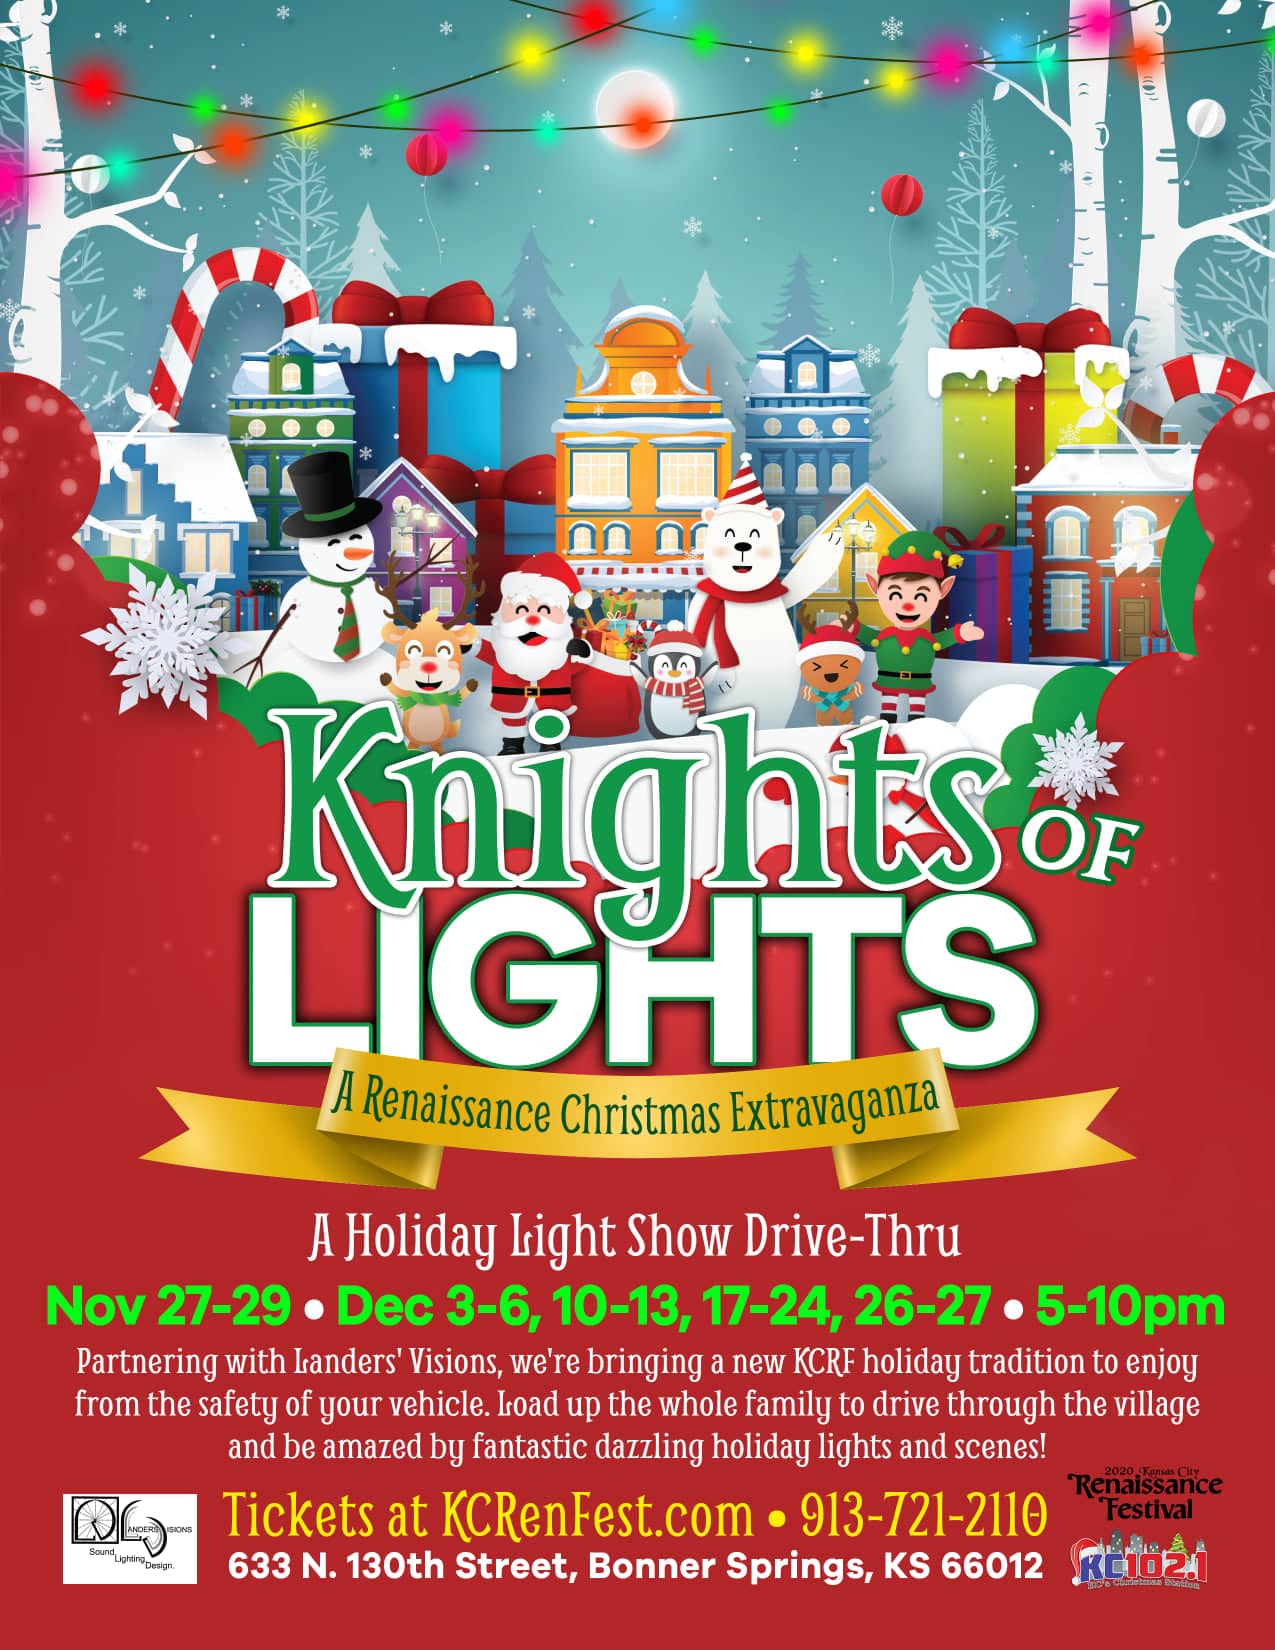 Knights of Lights A Renaissance Christmas Extravaganza Hot 103 Jamz!